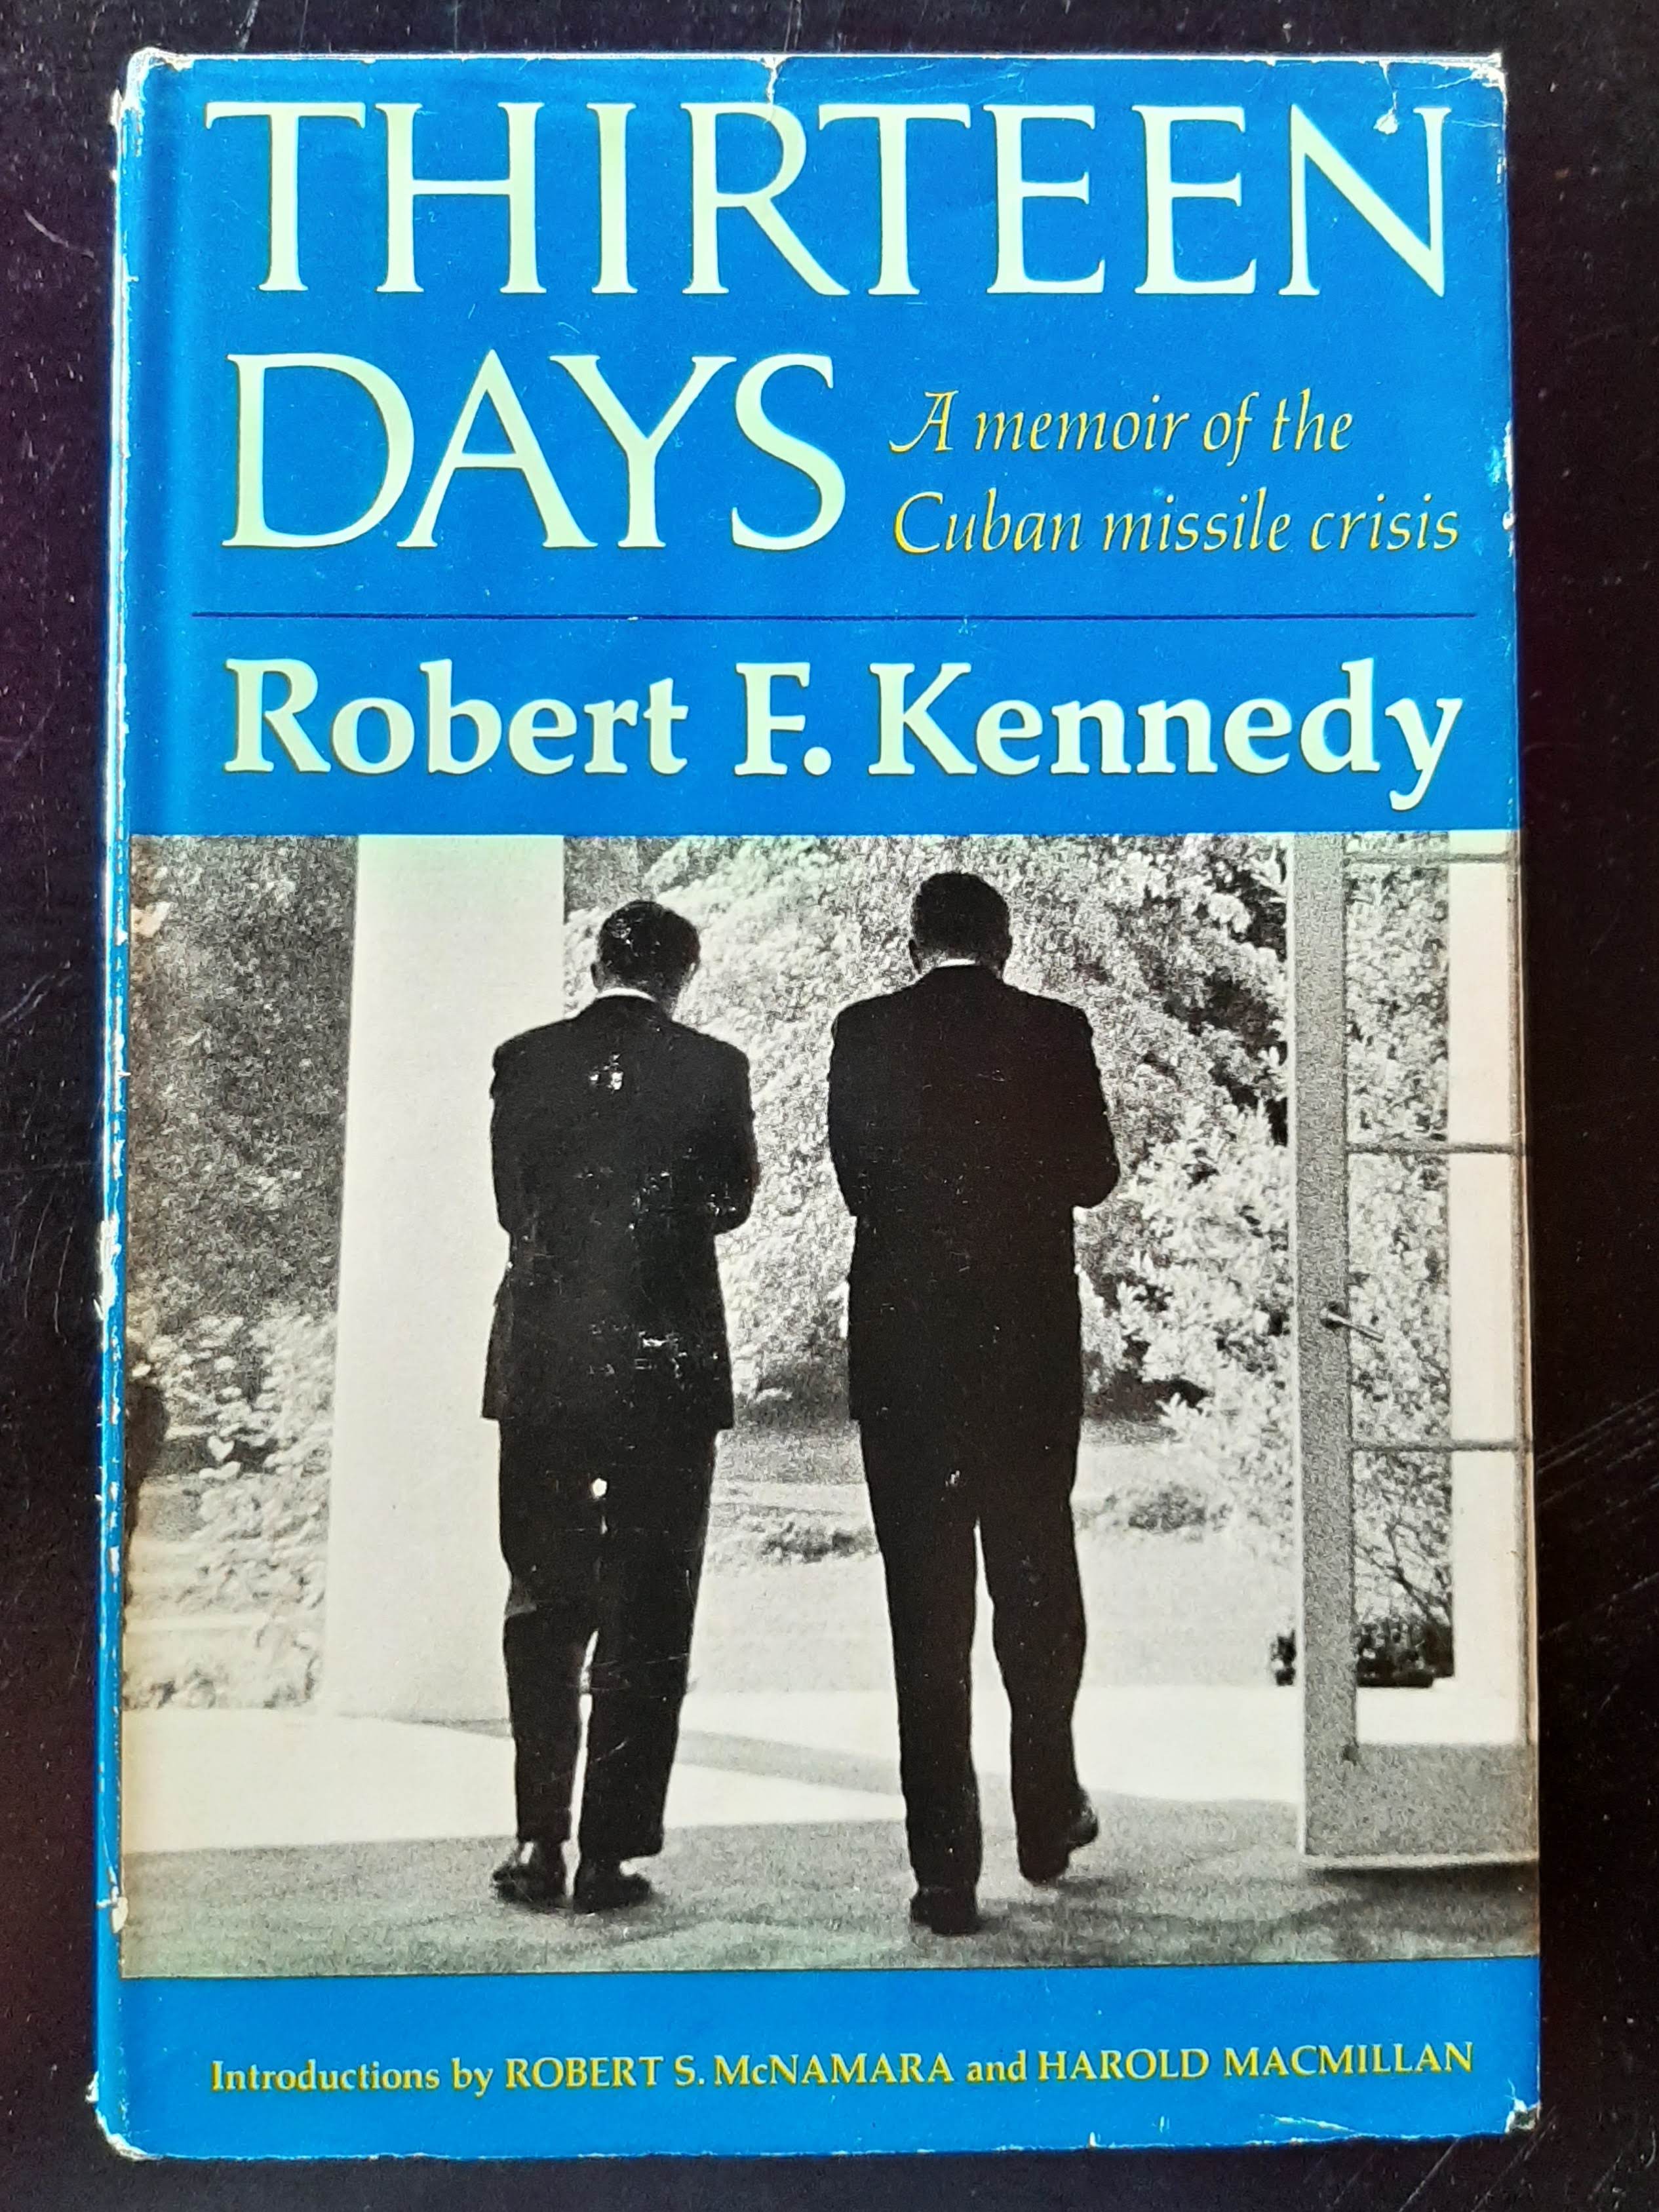 thirteen-days-a-memoir-of-the-cuban-missile-crisis-by-kennedy-robert-f-very-good-hardcover